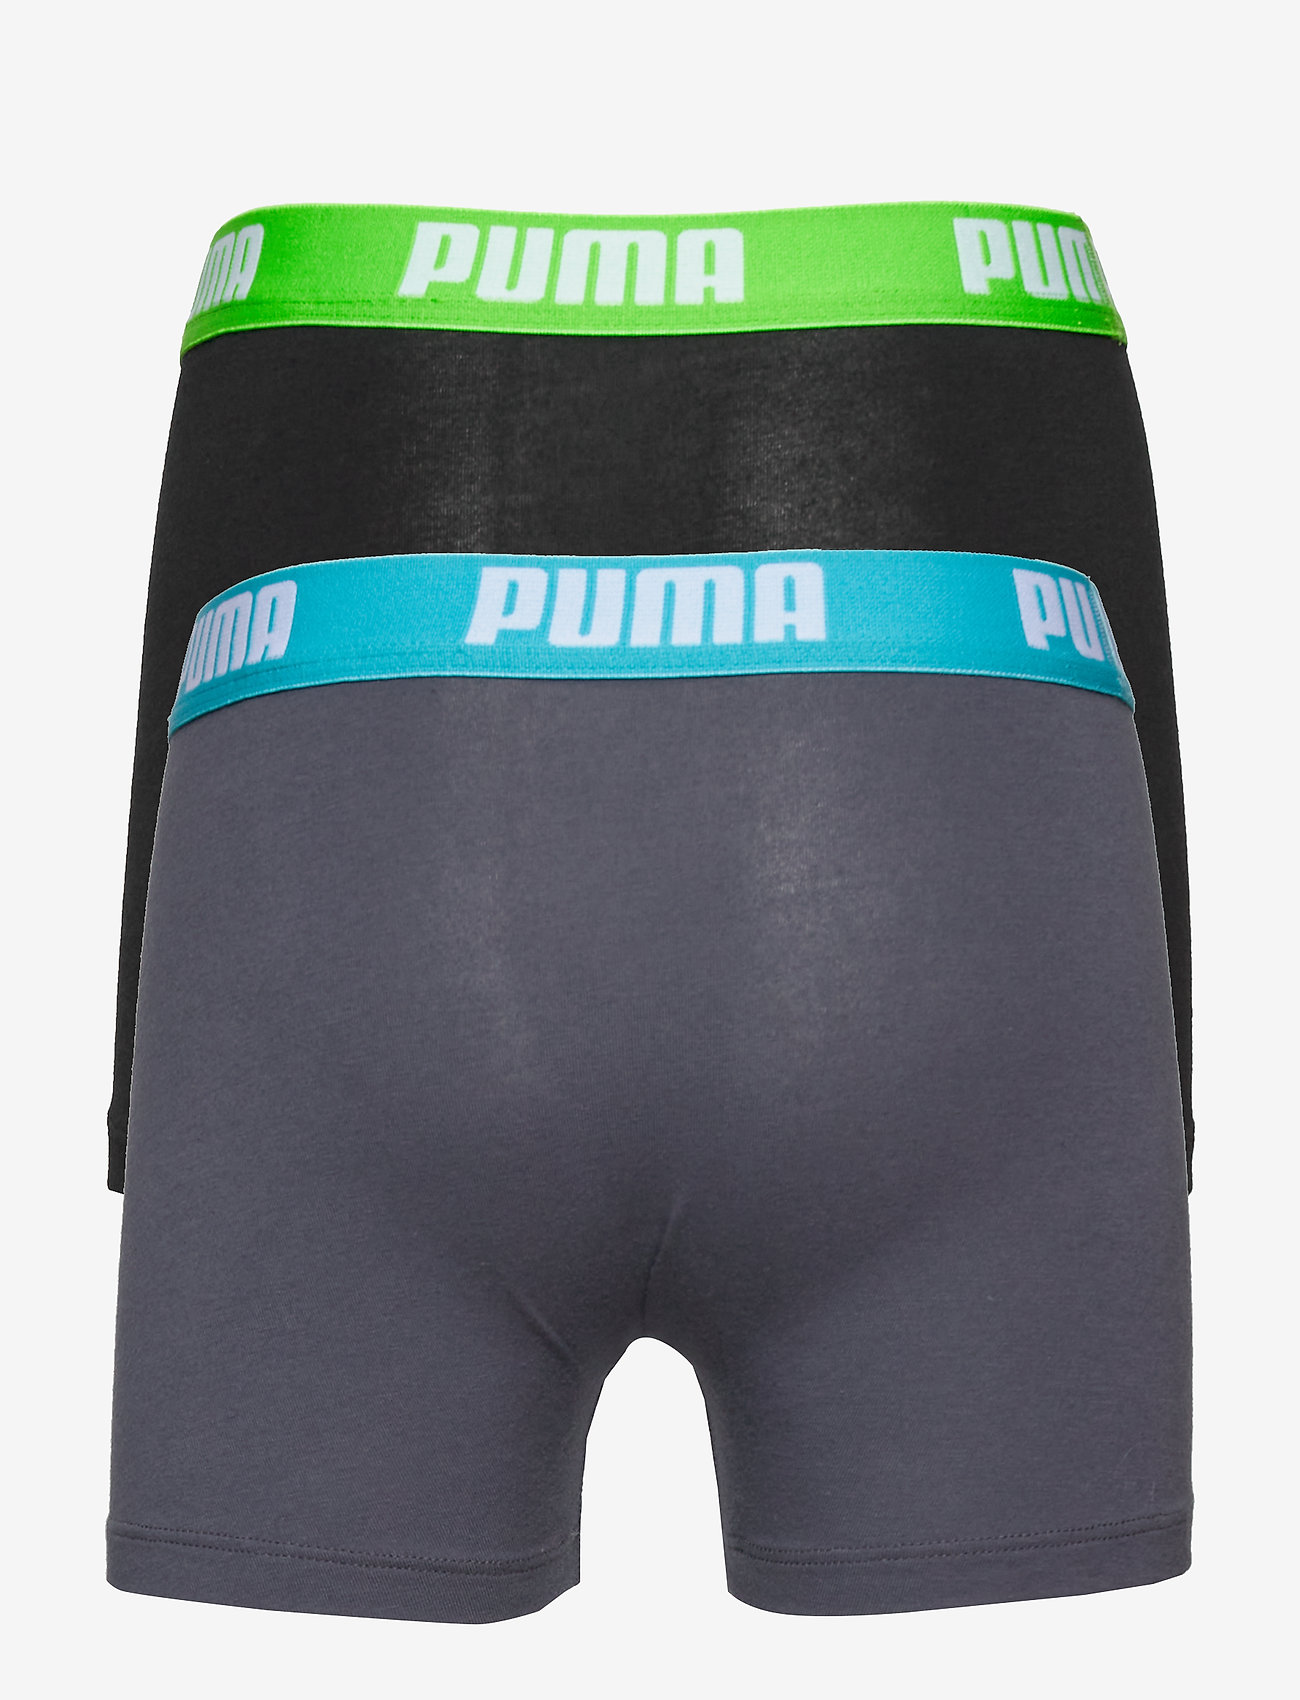 puma underwear india